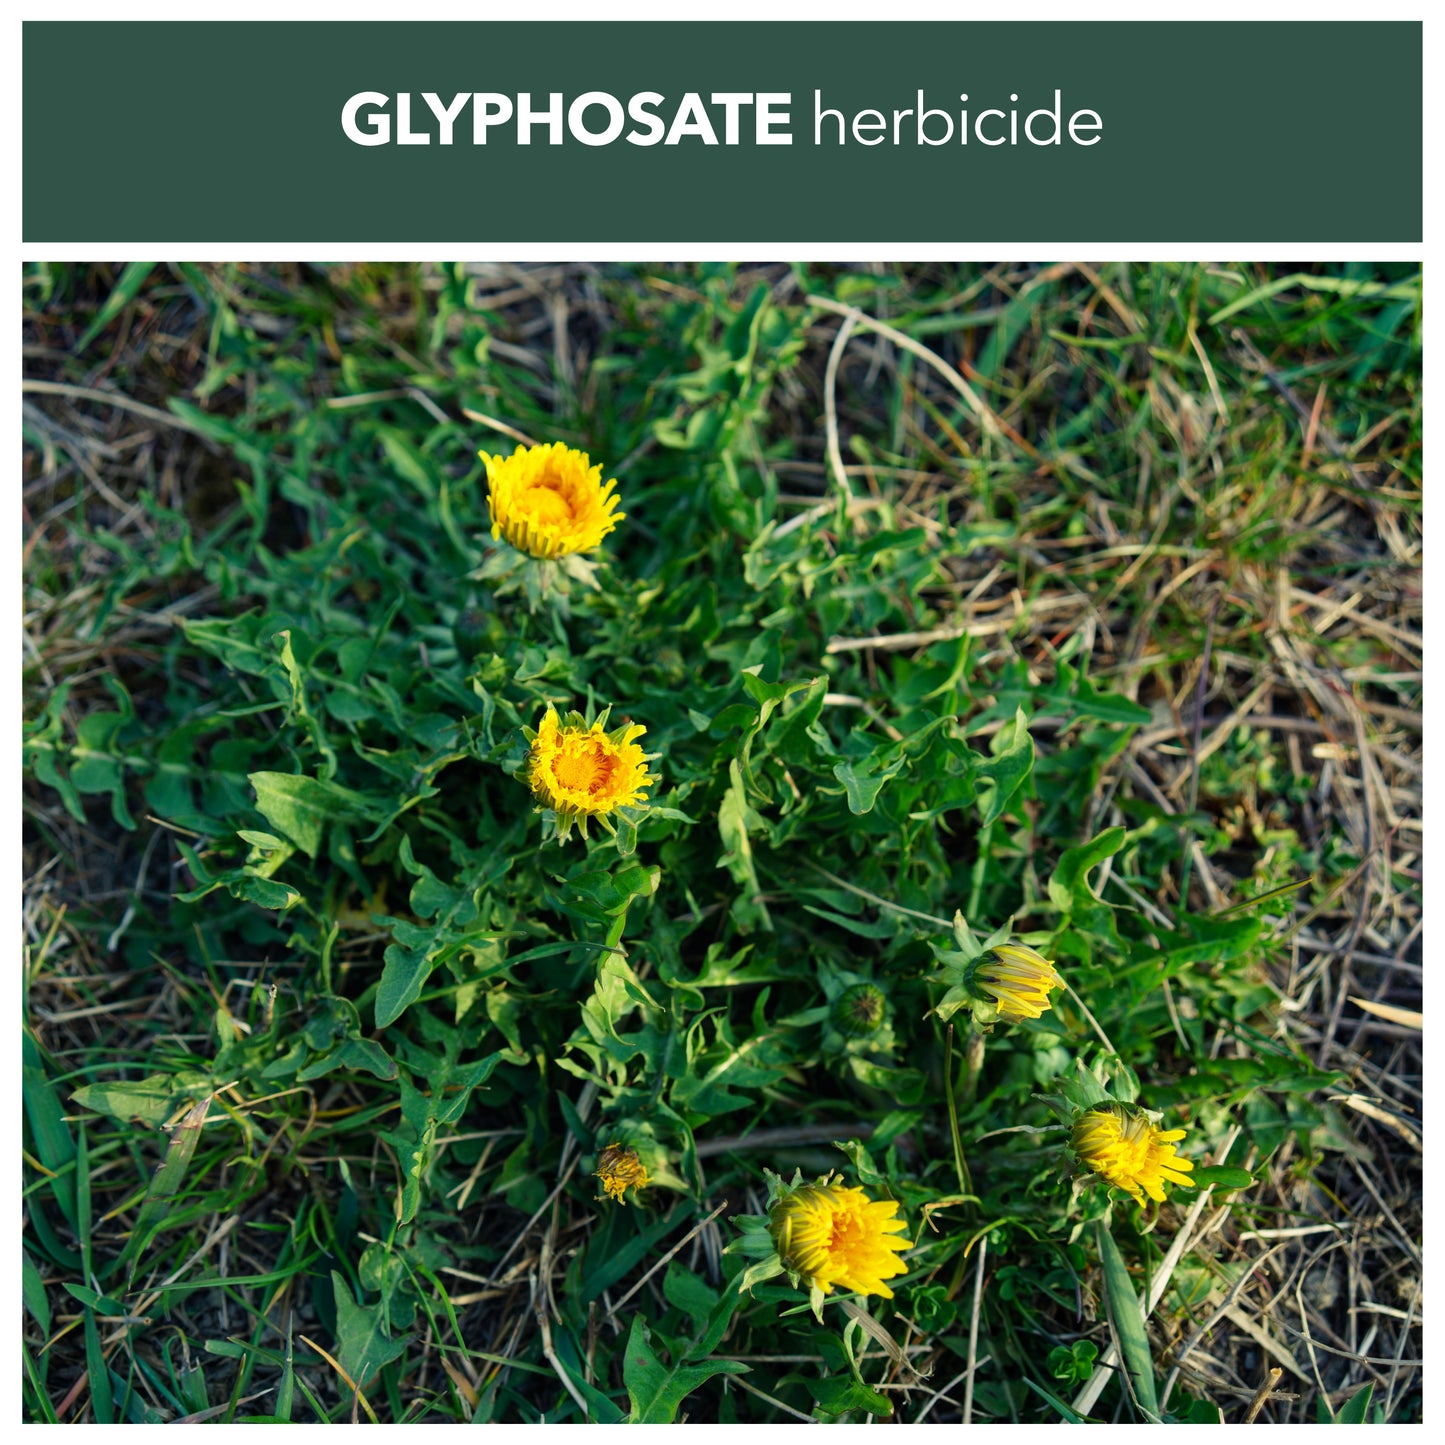 glyphosate herbicide